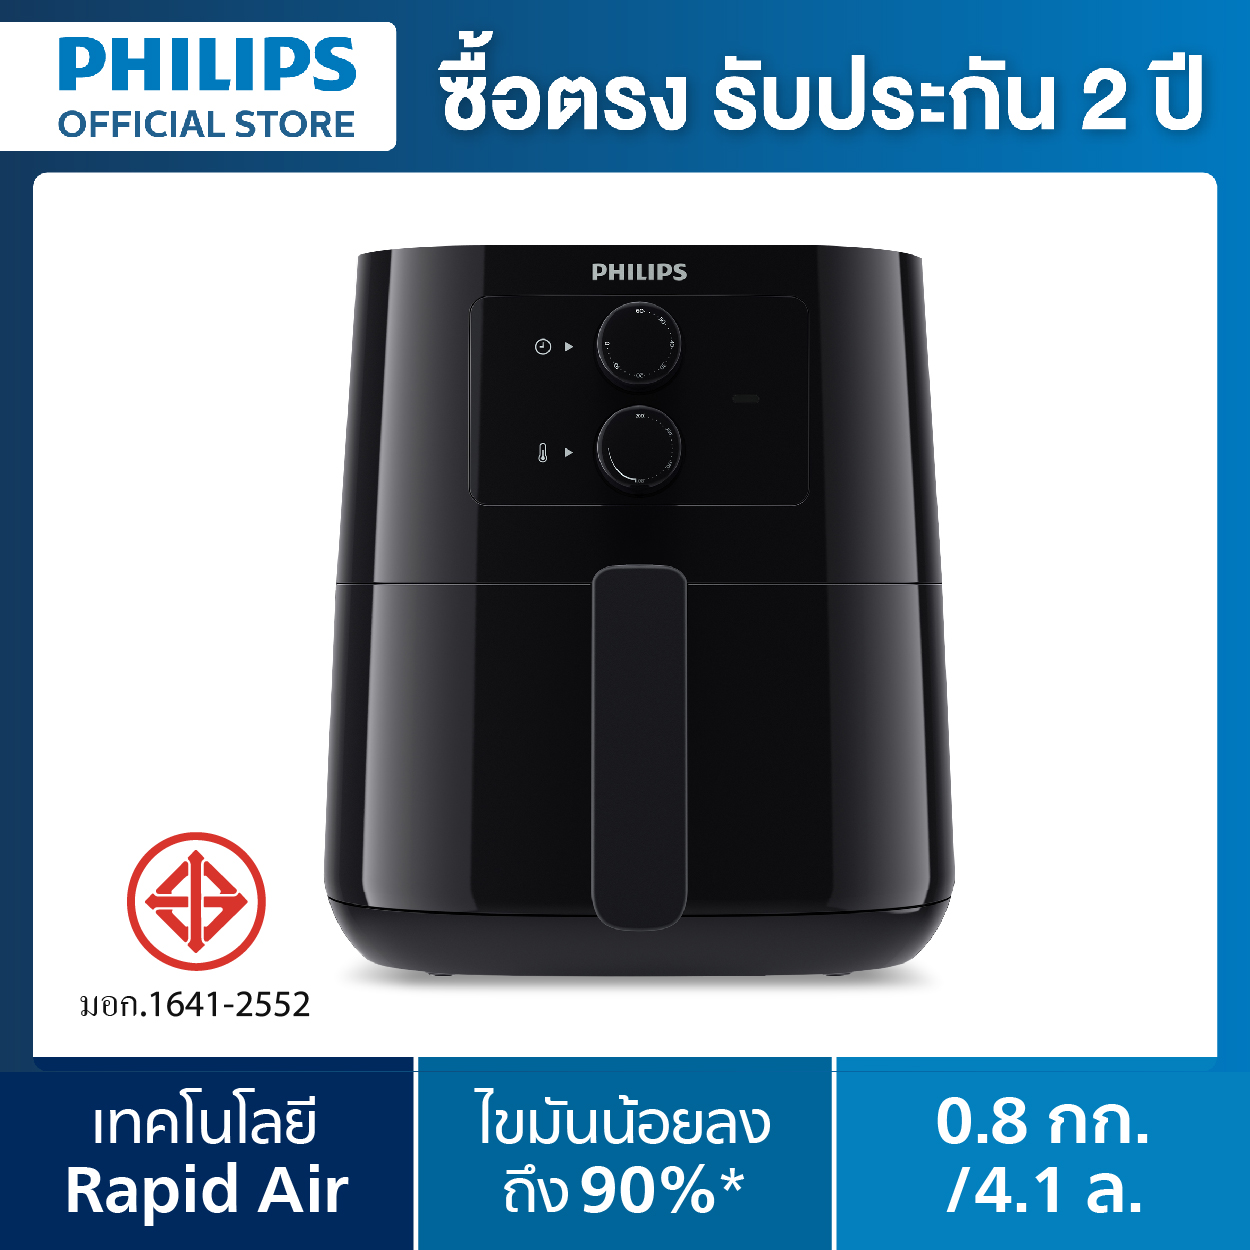 PHILIPS Air Fryer หม้อทอดอากาศ หม้อทอดไร้น้ำมัน ความจุ 4.1 ลิตร HD9200/91 - Rapid Air, NutriU app